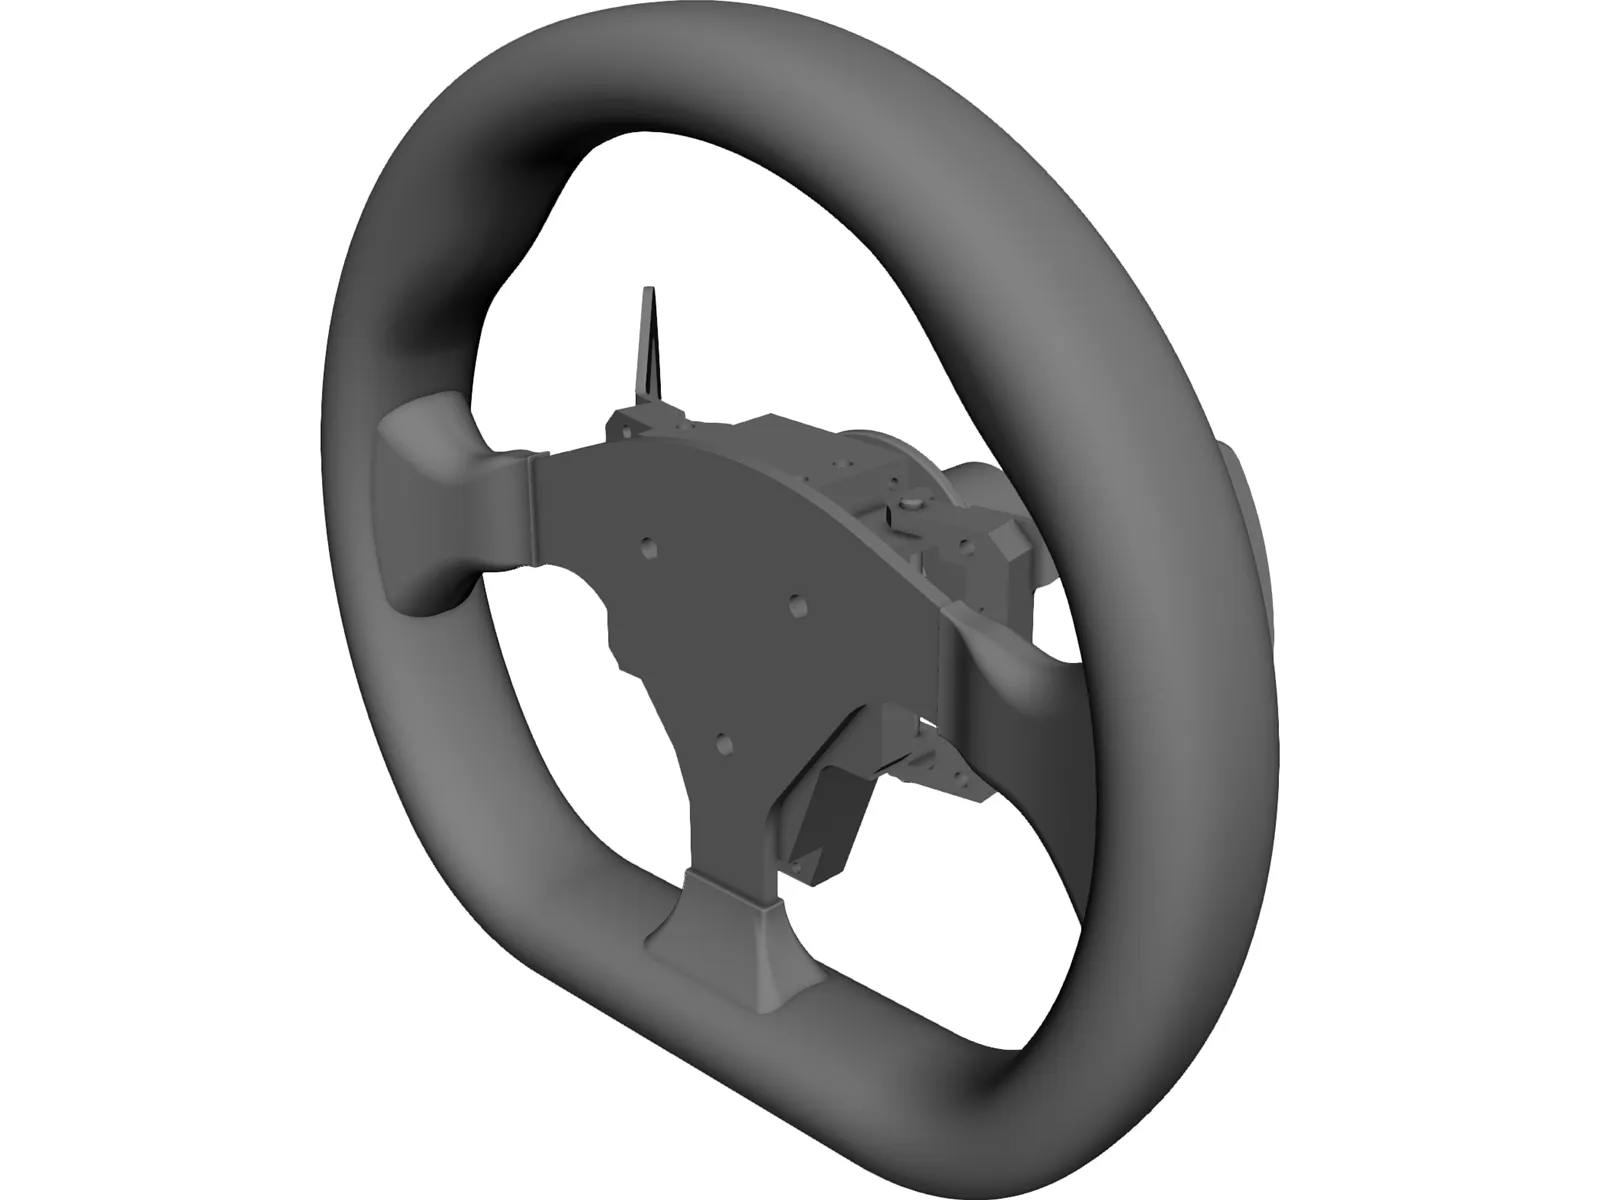 Steering Wheel 3D Model